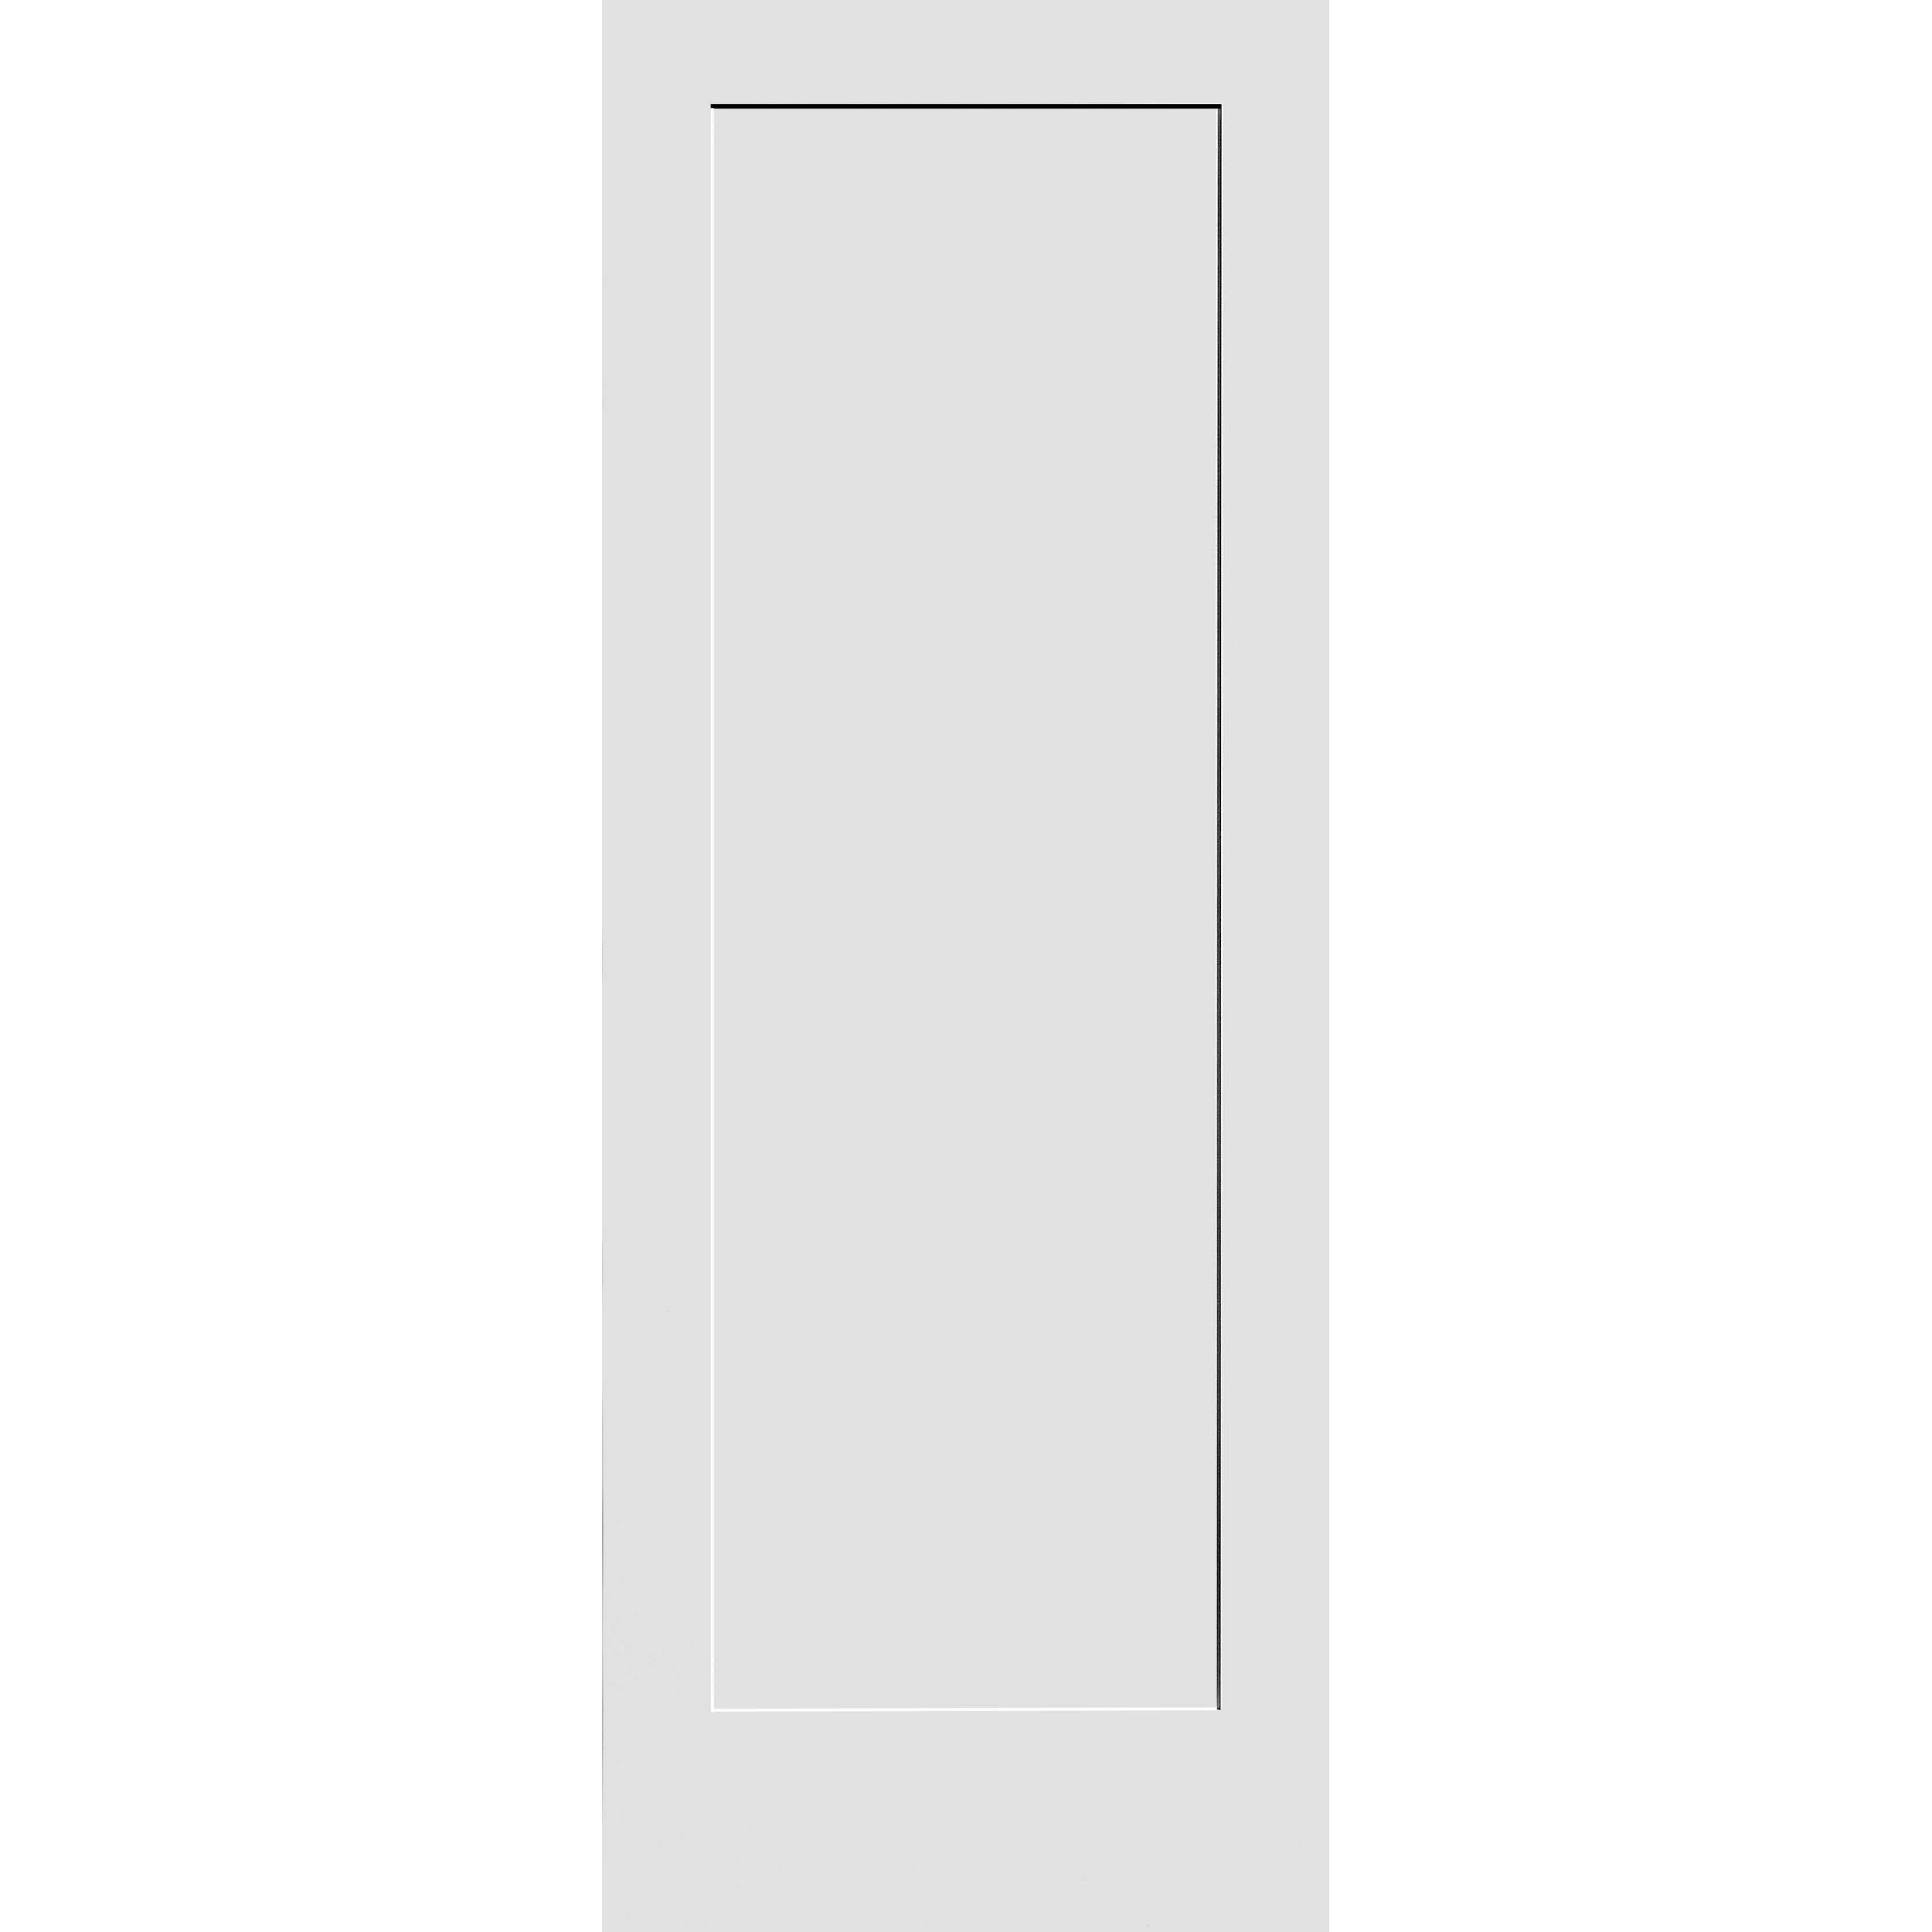 34X96 #8401 MDF PRIMED SHAKER PANEL INTERIOR DOOR 1-3/4 THICKNESS